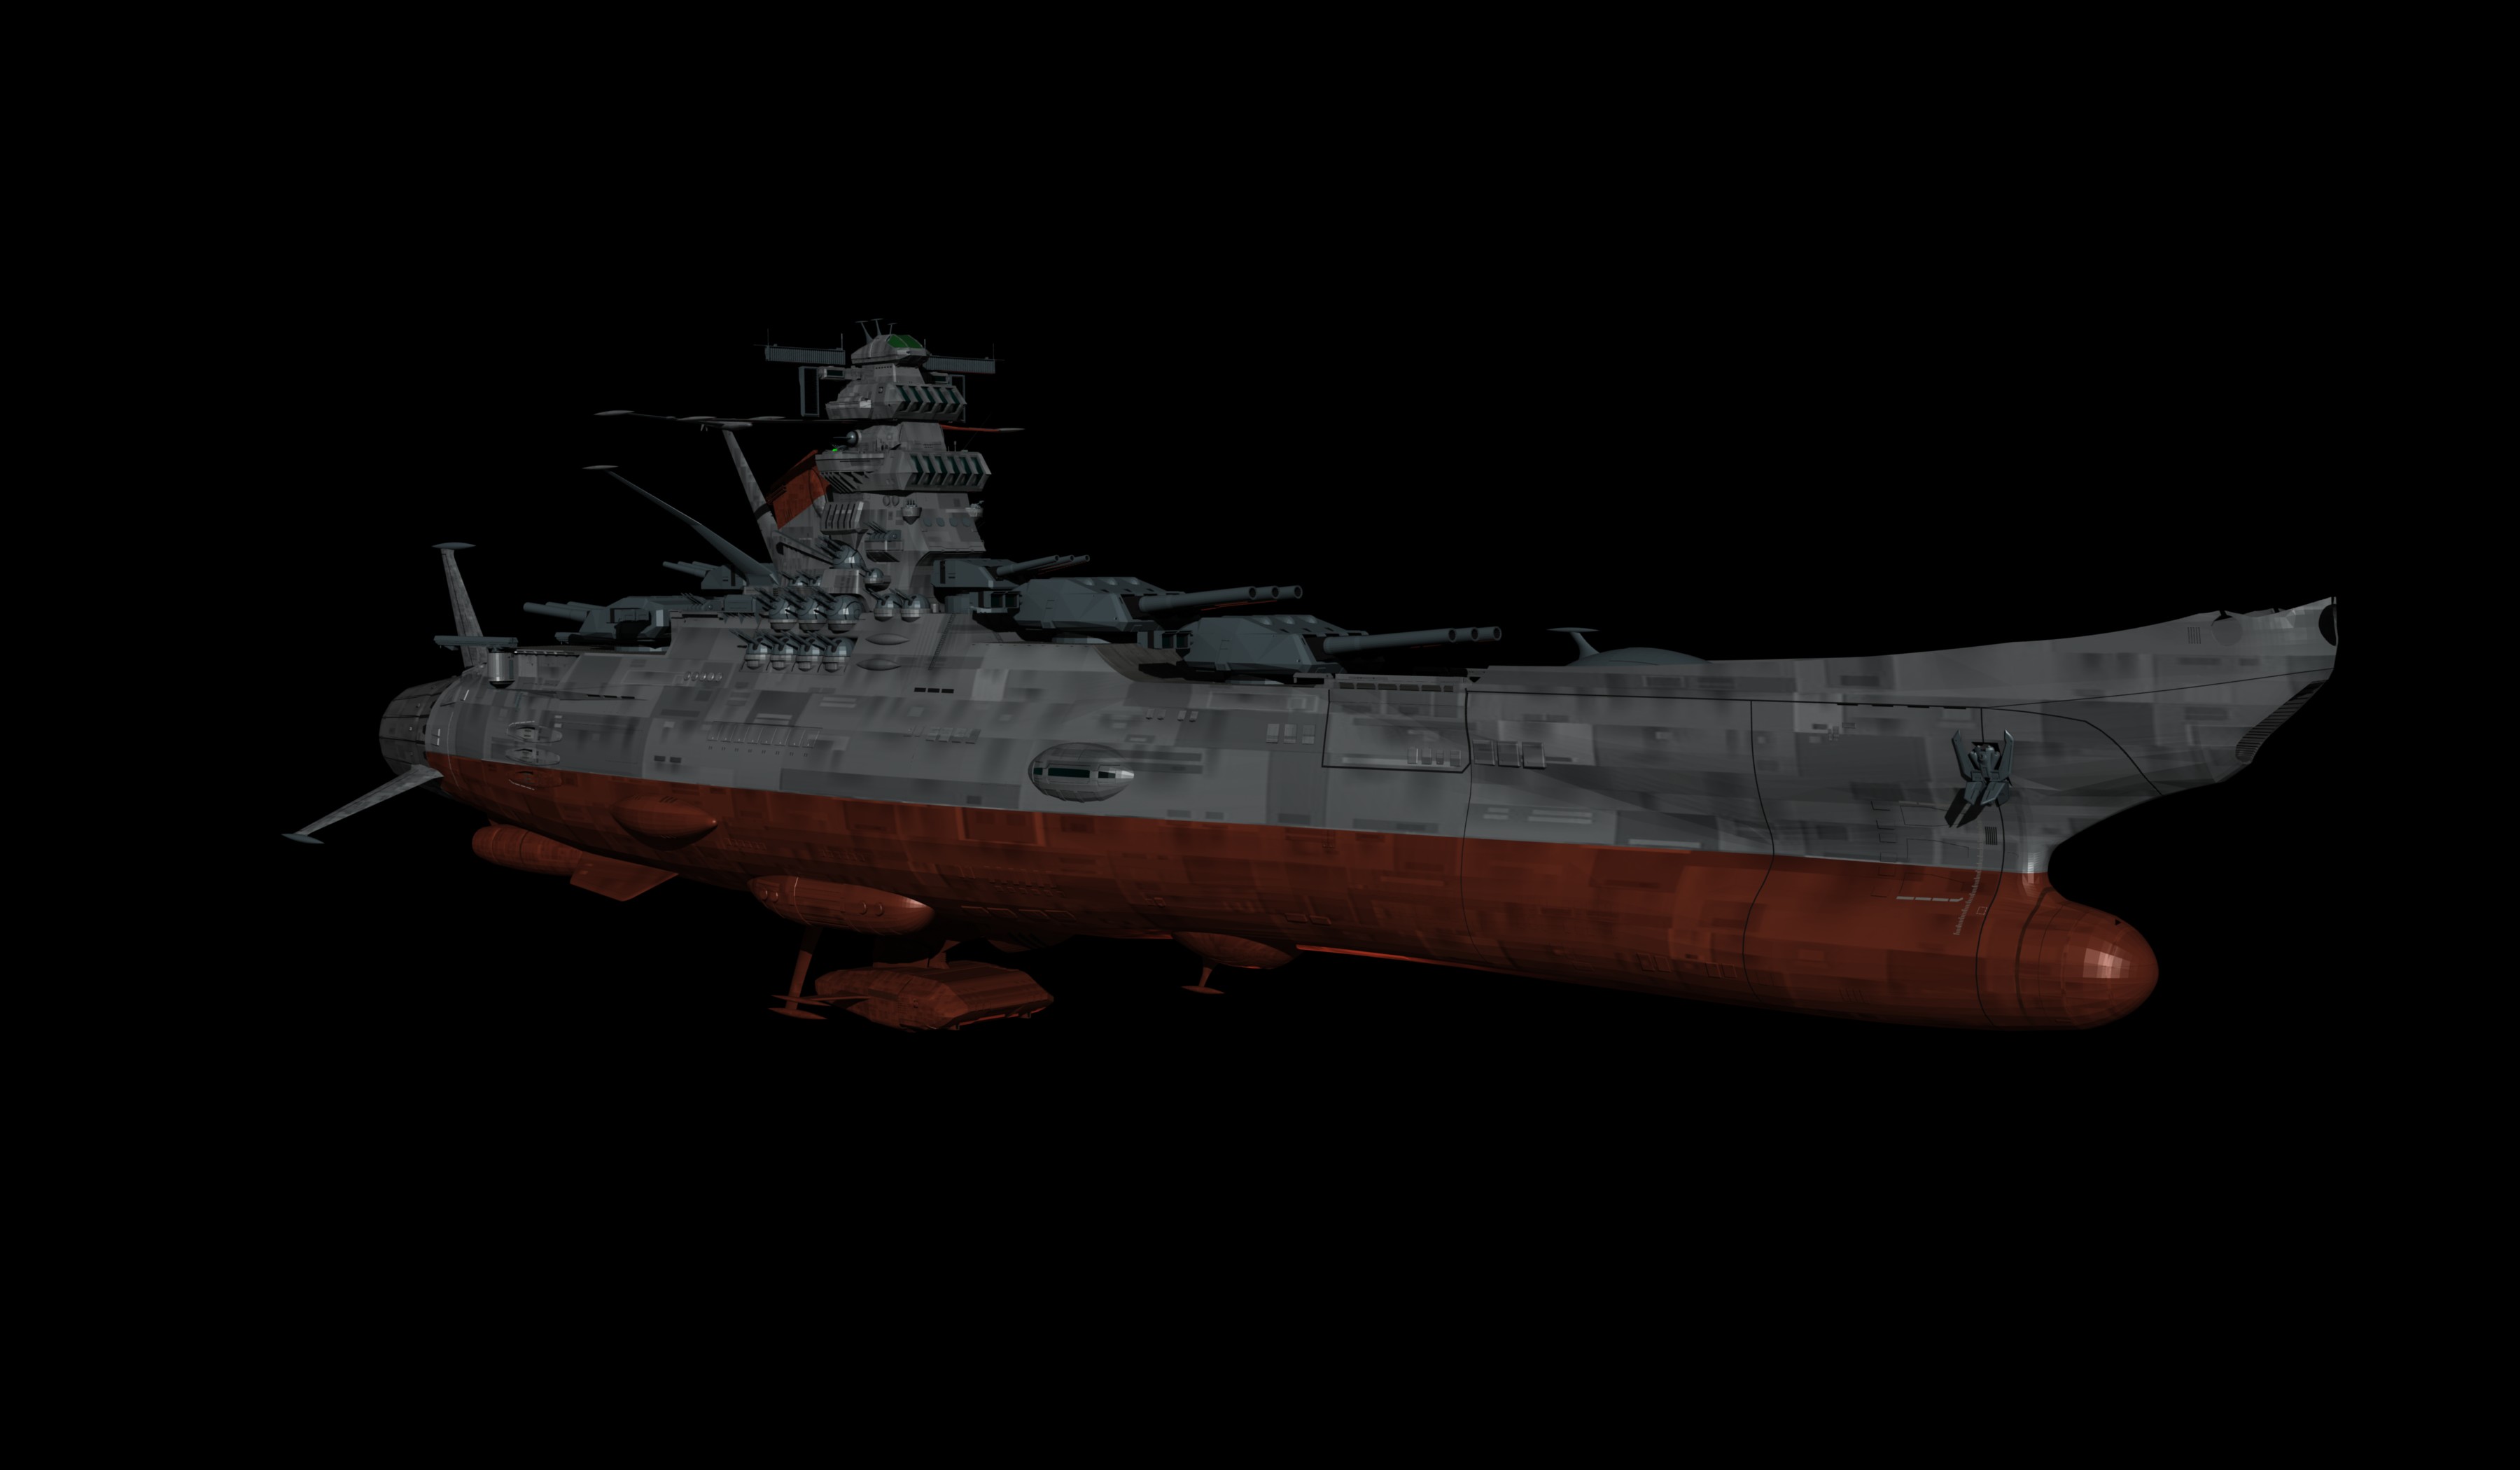 Space Battleship Yamato by dragonpyper on